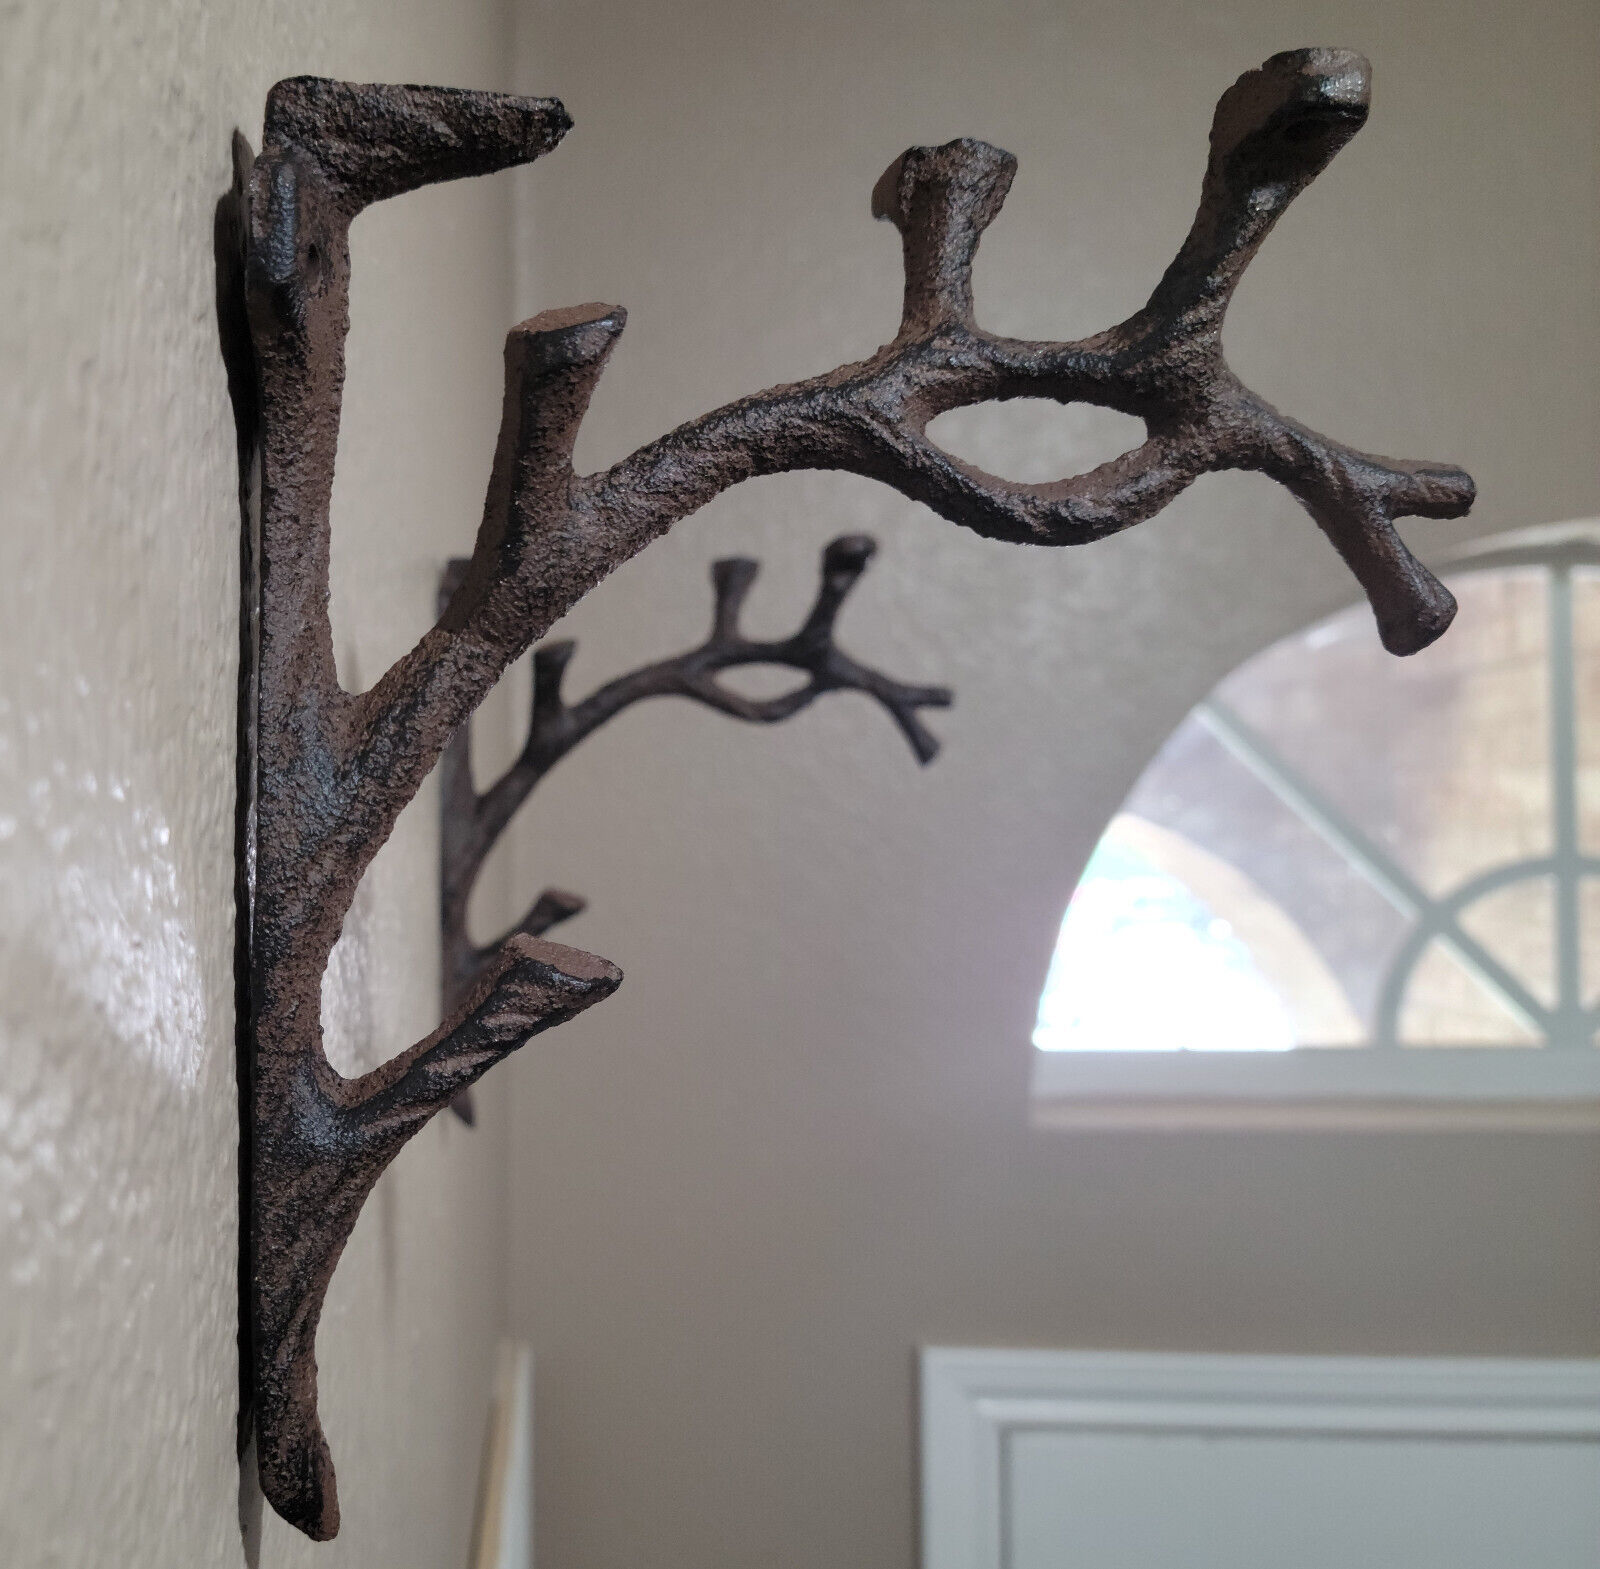 2 Rustic Cast Iron Shelf Bracket Wall Mount Hardware Brace Tree Branch Sculpture Без бренда - фотография #2